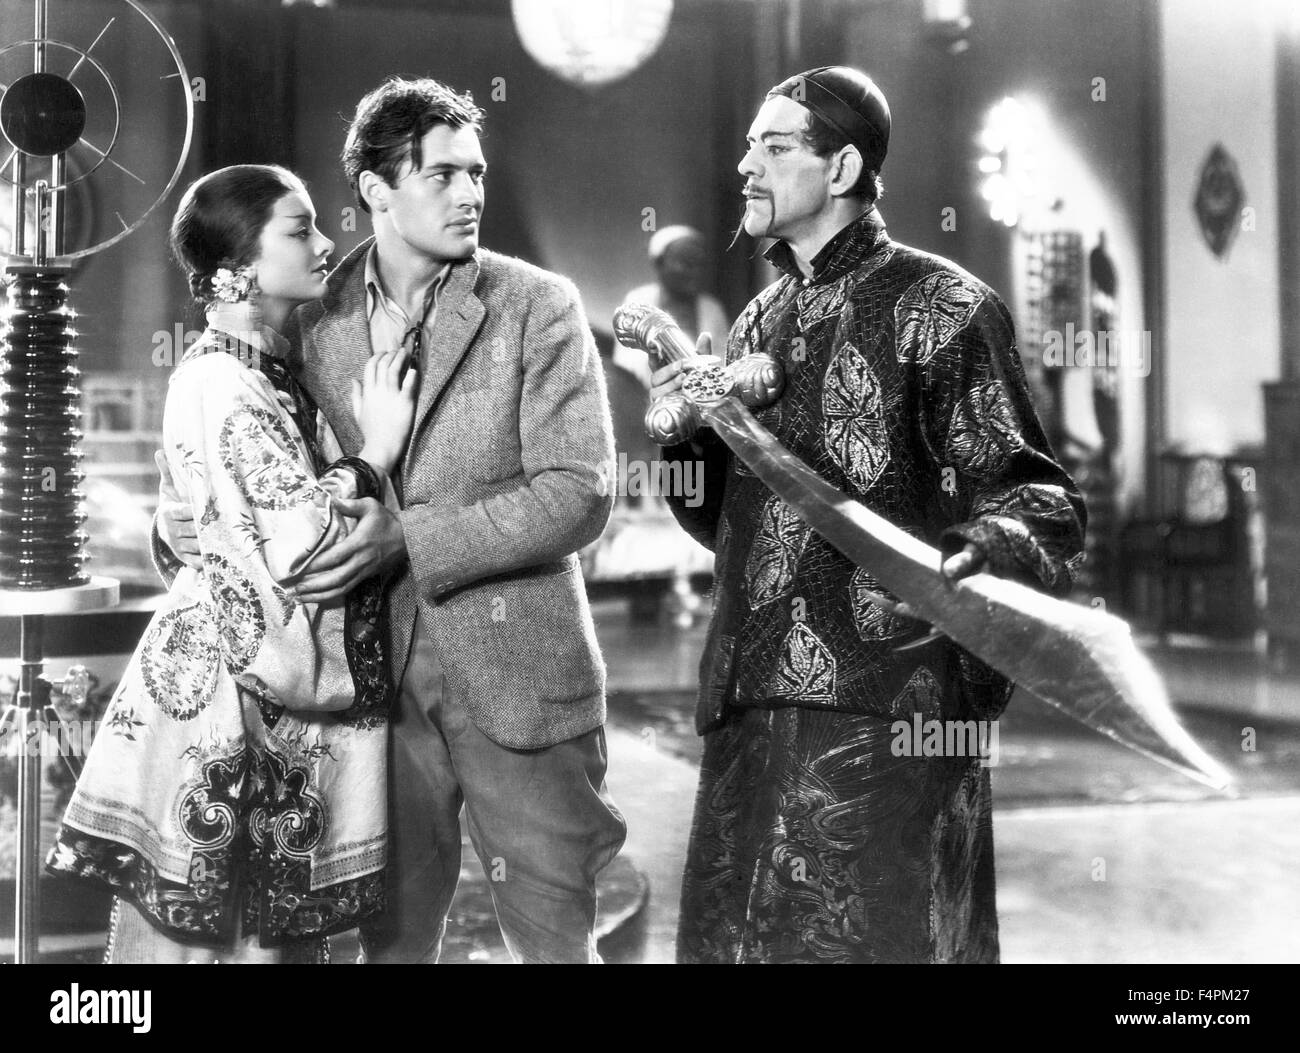 1932 Celebrity Photo Print Actress Myrna Loy in "The Mask of Fu Manchu" 